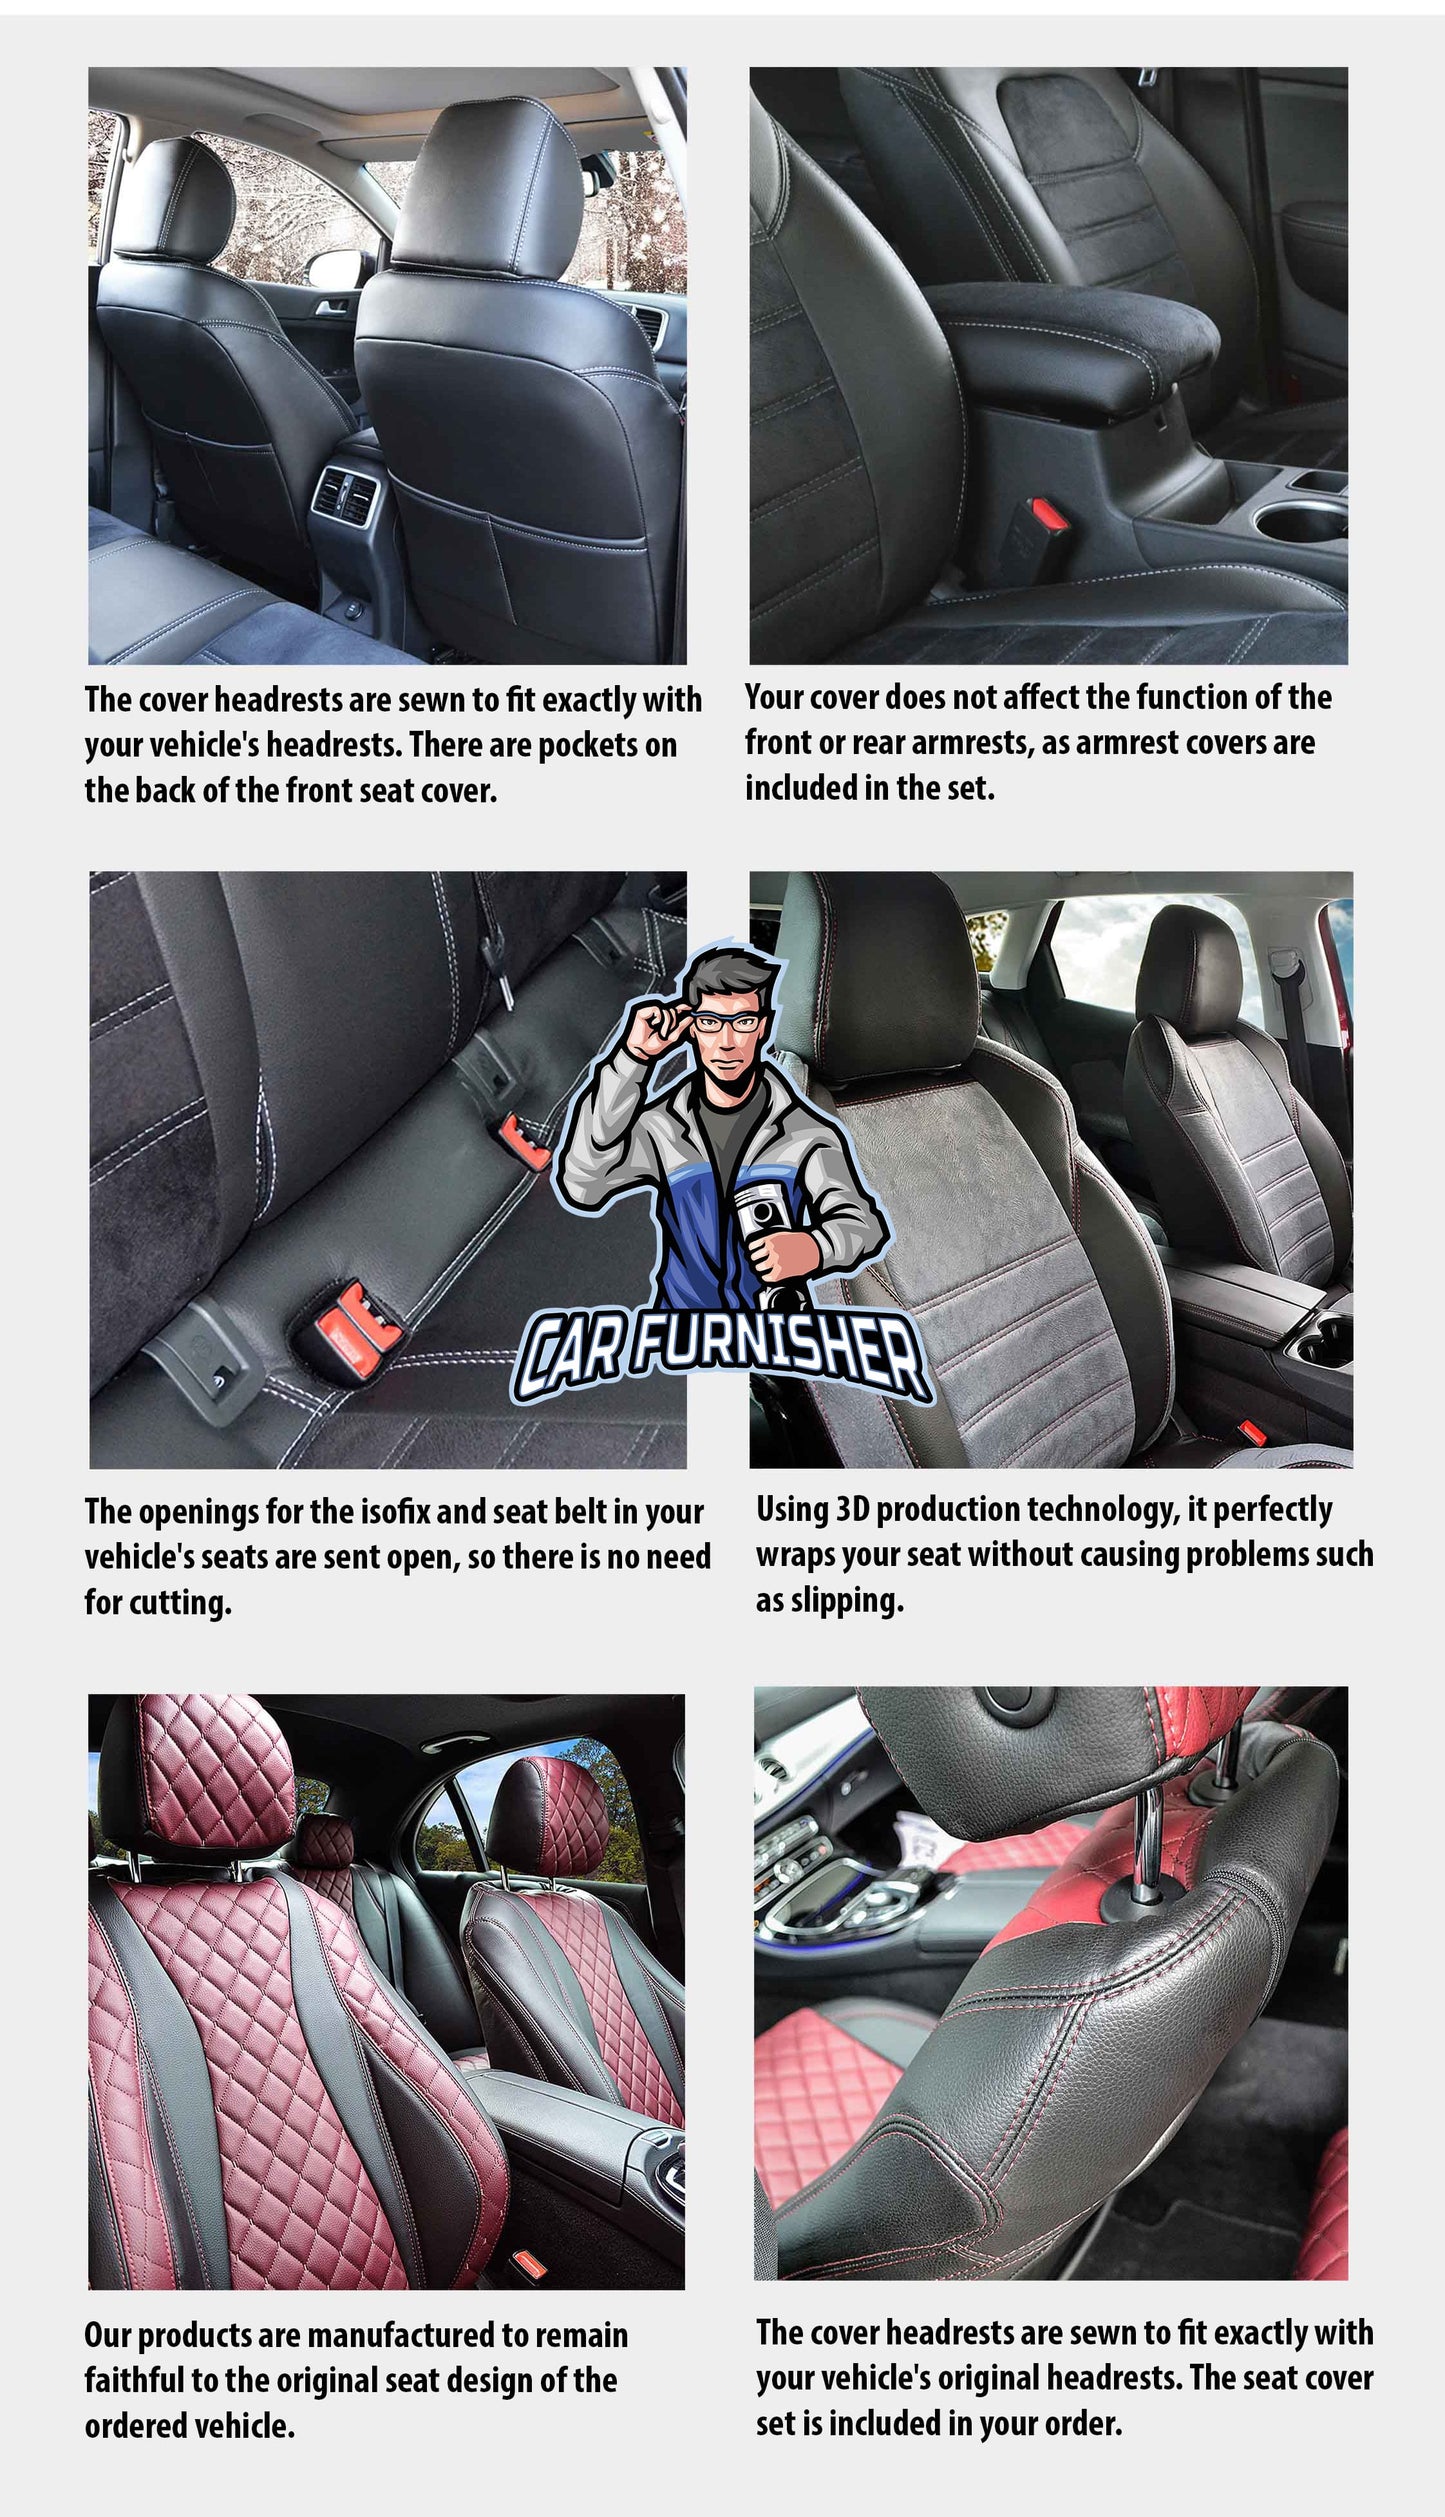 Kia Cerato Seat Covers Amsterdam Leather Design Smoked Black Leather